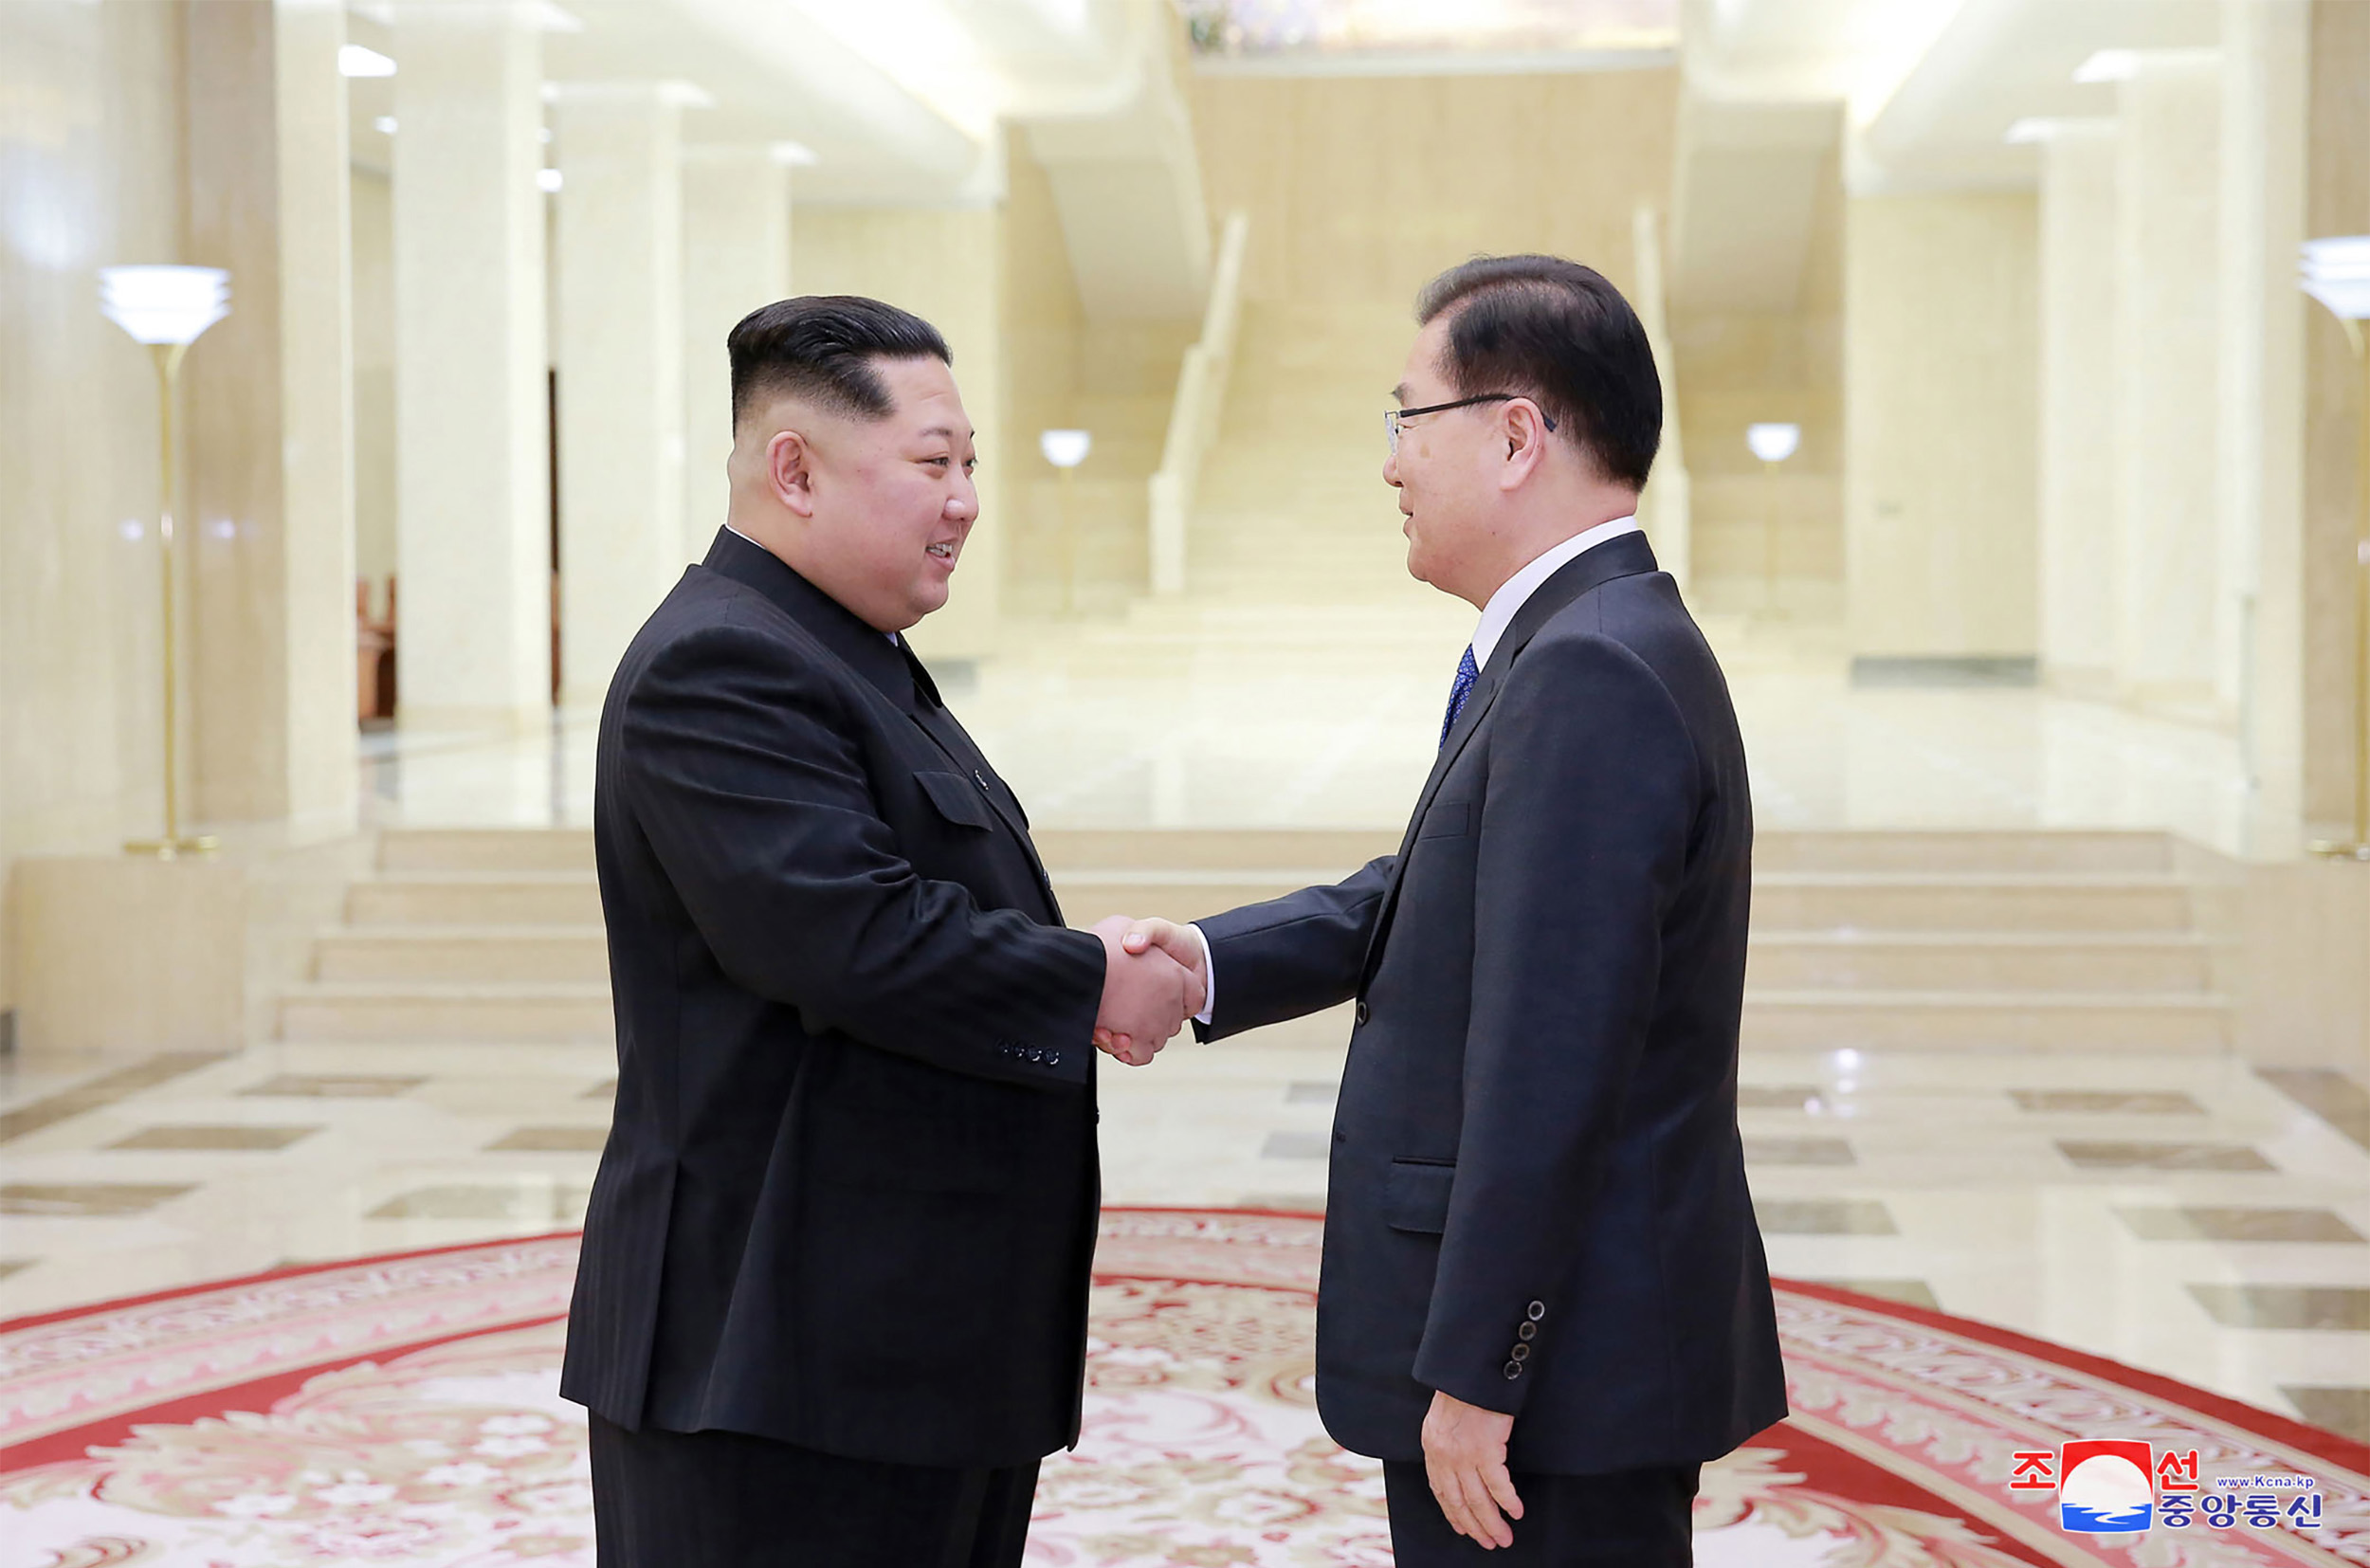 PHOTO: North Korean leader Kim Jong-Un shakes hands with South Korean chief delegator Chung Eui-yong ,March 5, 2018, during their meeting in Pyongyang, North Korea.